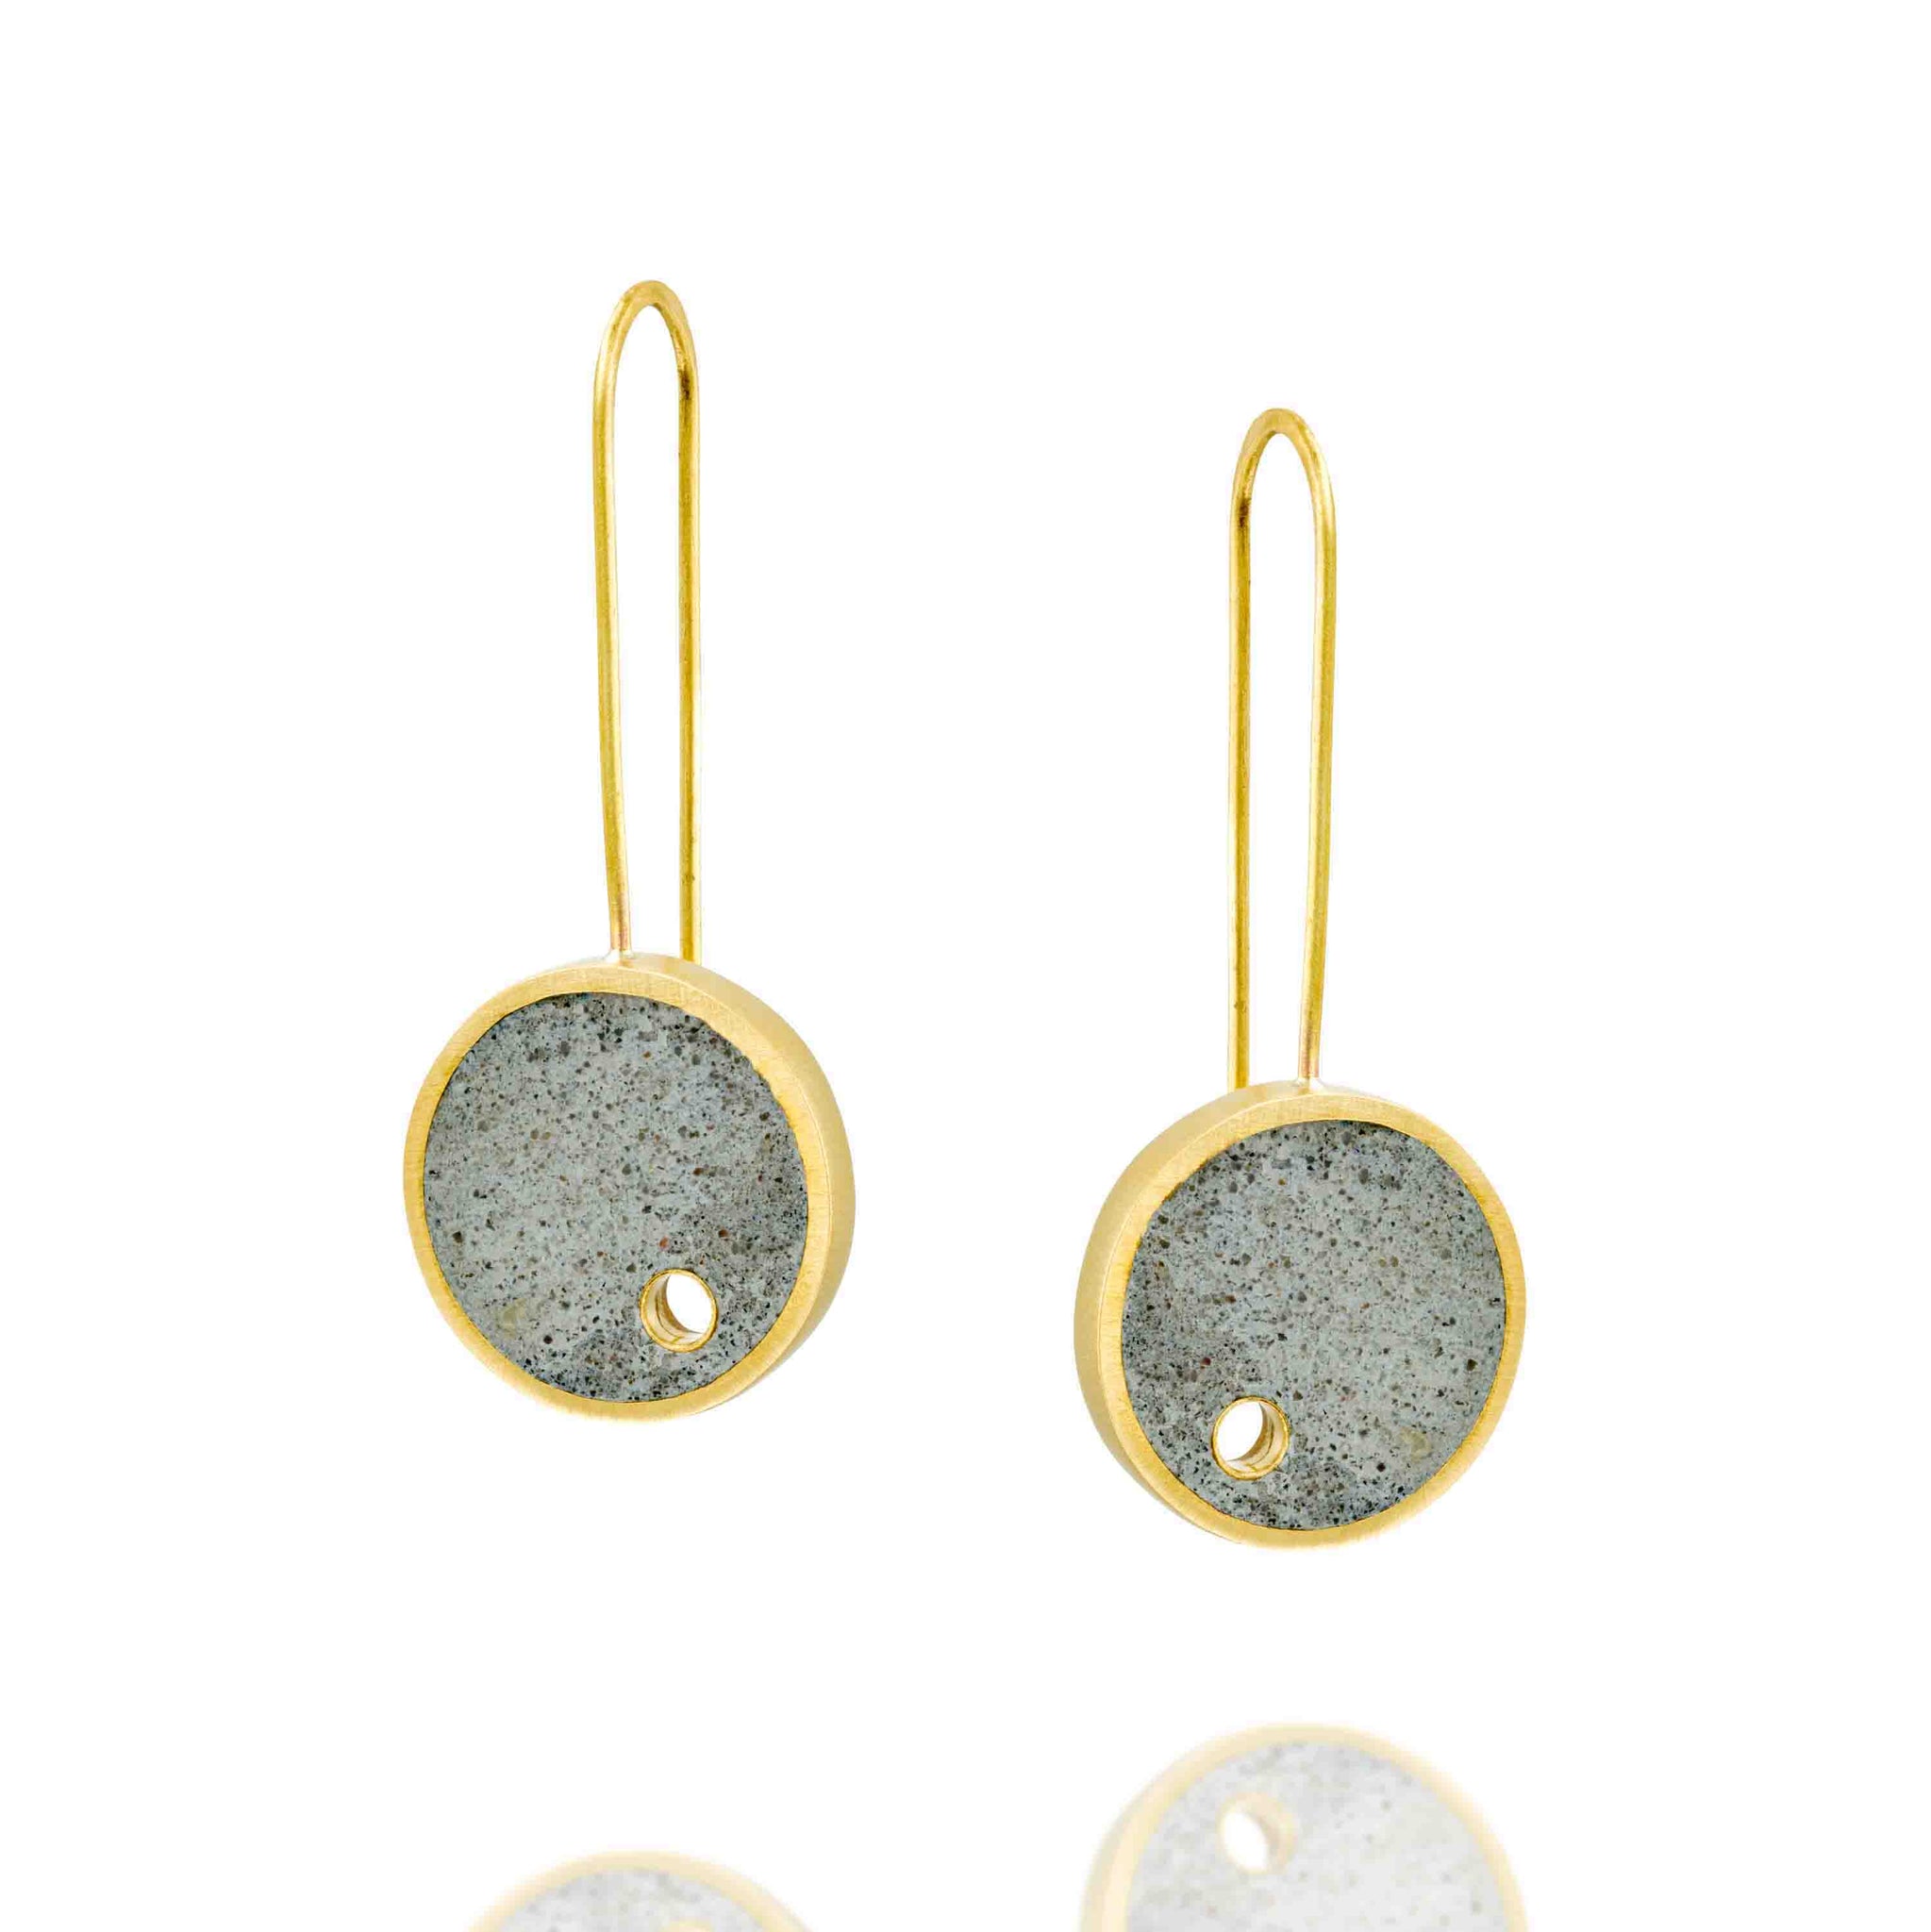 Hole concrete earrings - by BAARA. Gold earrings for women, gift for architect